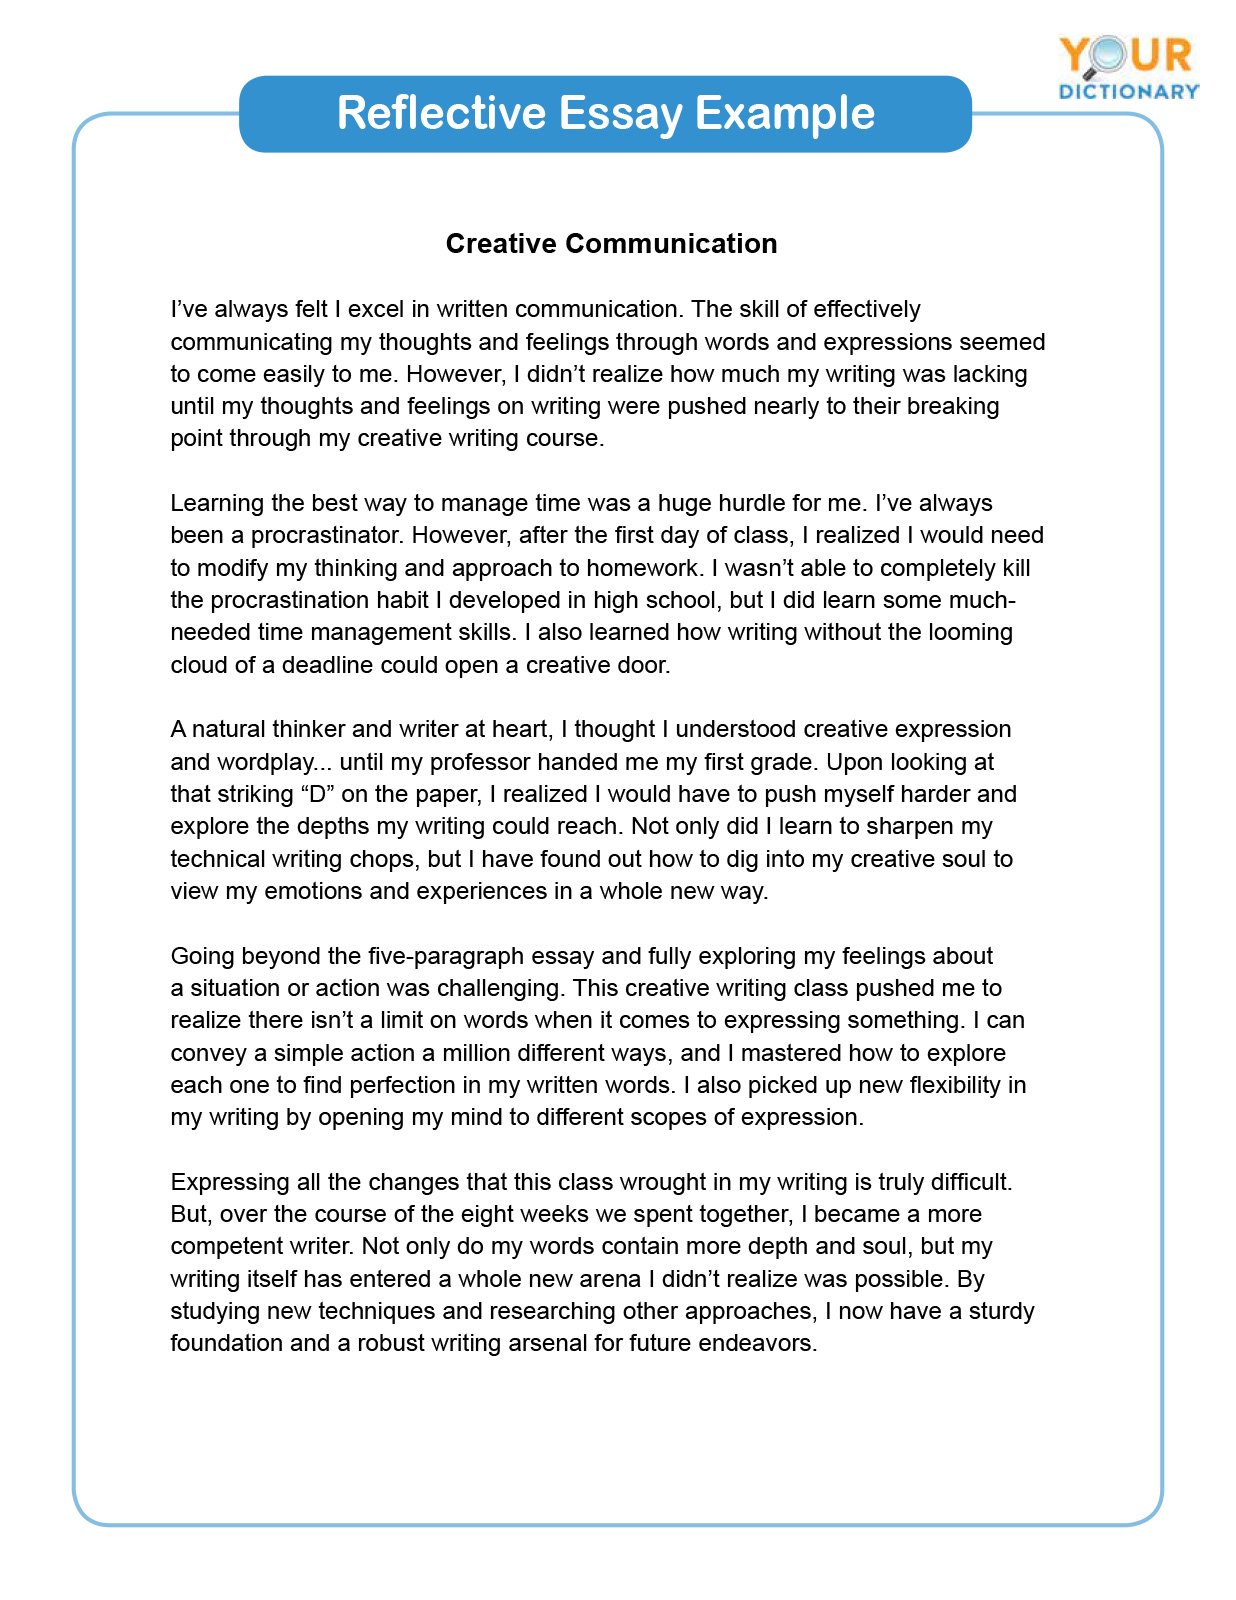 Reflective essay example using communication